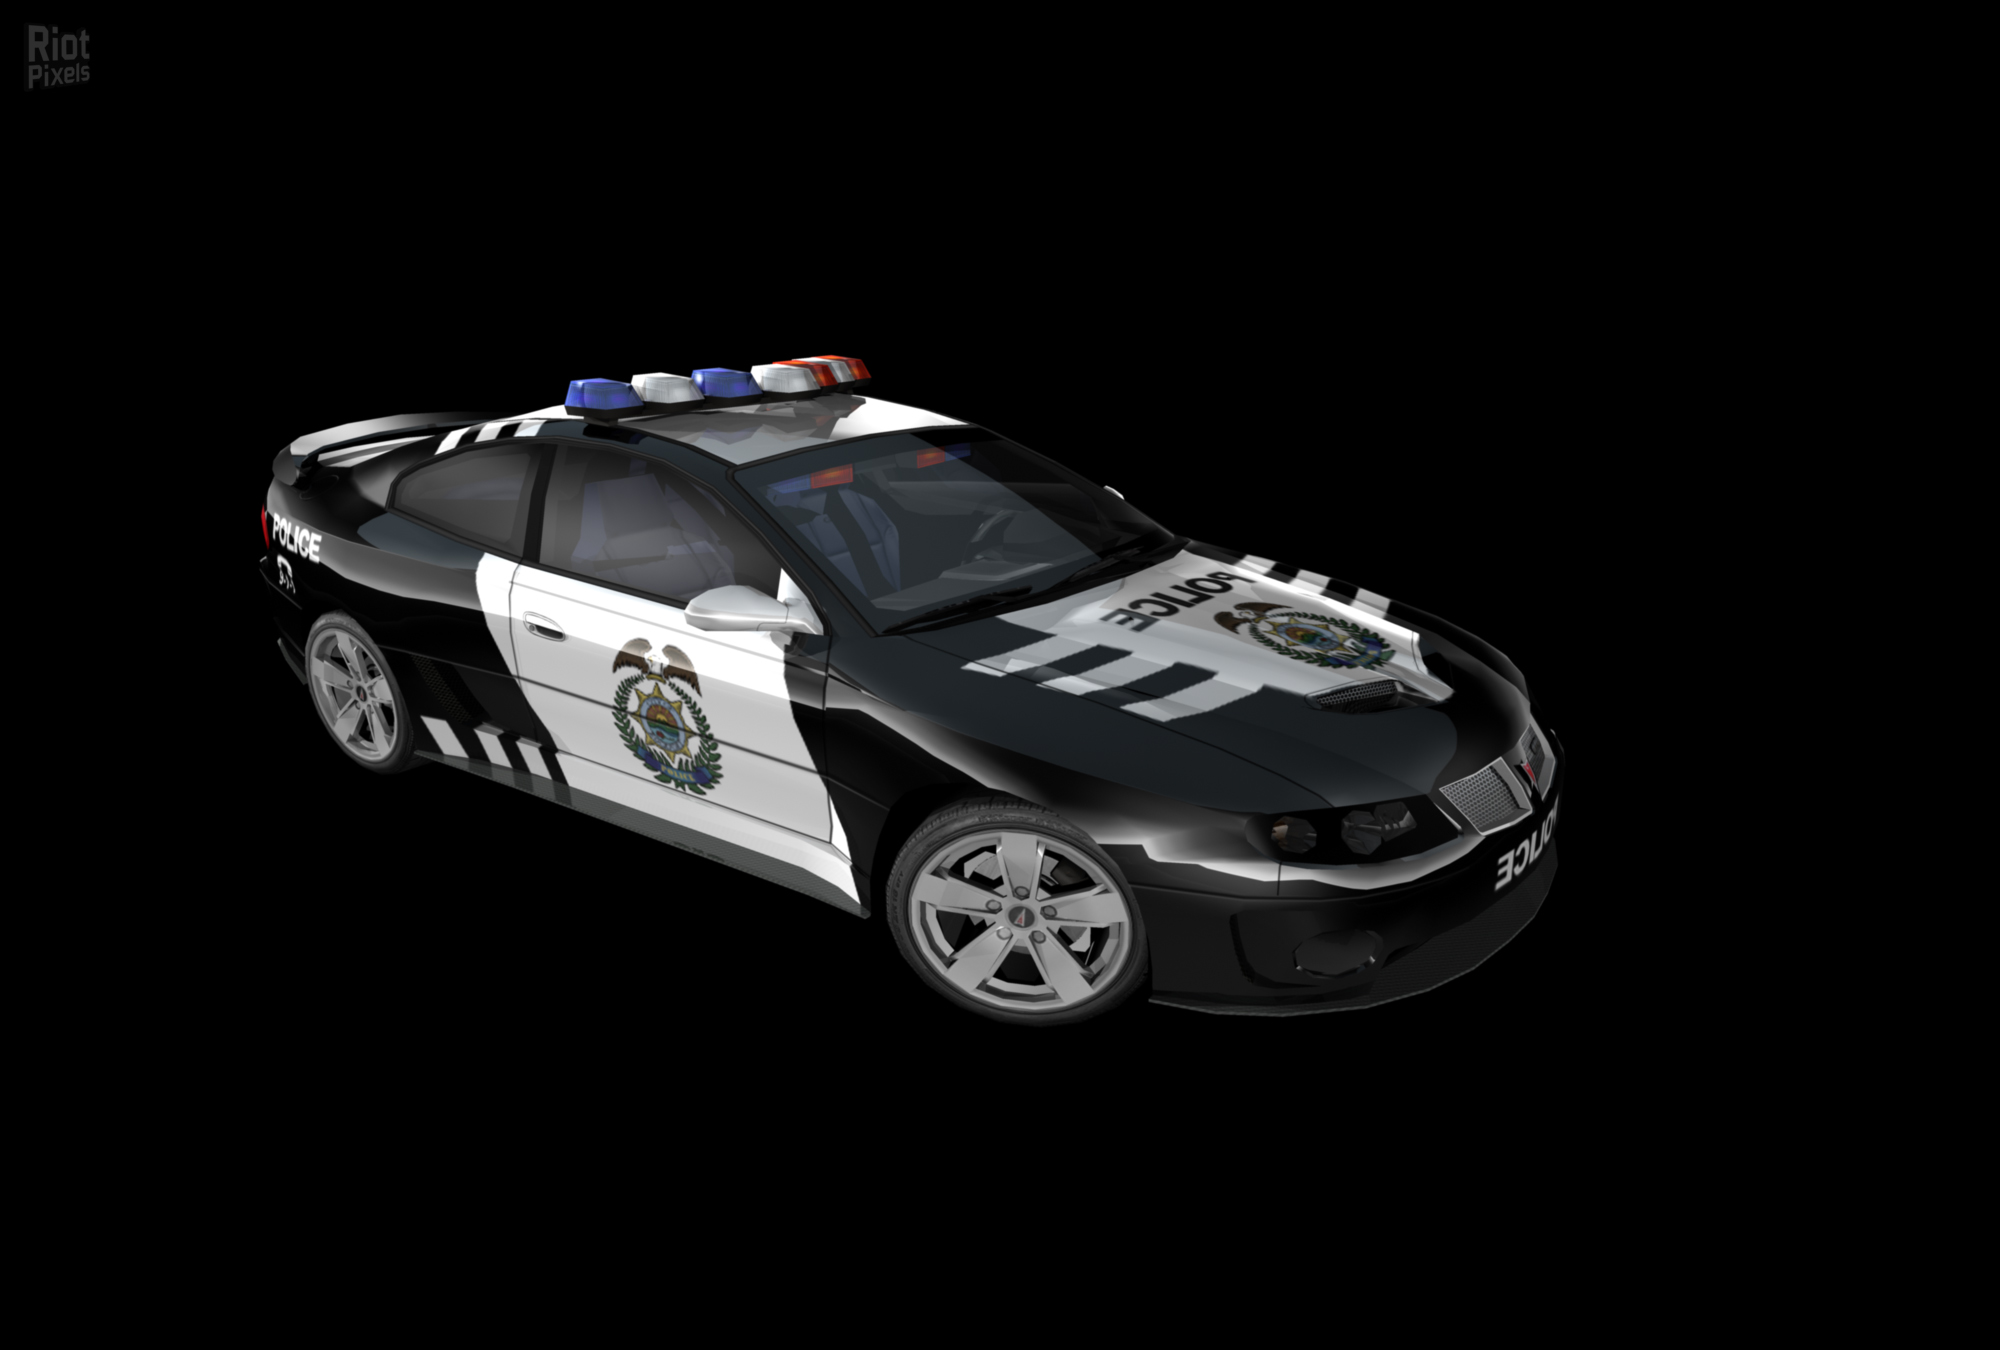 Policeman speed. Полиция в NFS MW 2005. NFS most wanted полиция. NFS most wanted полицейские машины. Полиция из need for Speed most wanted.